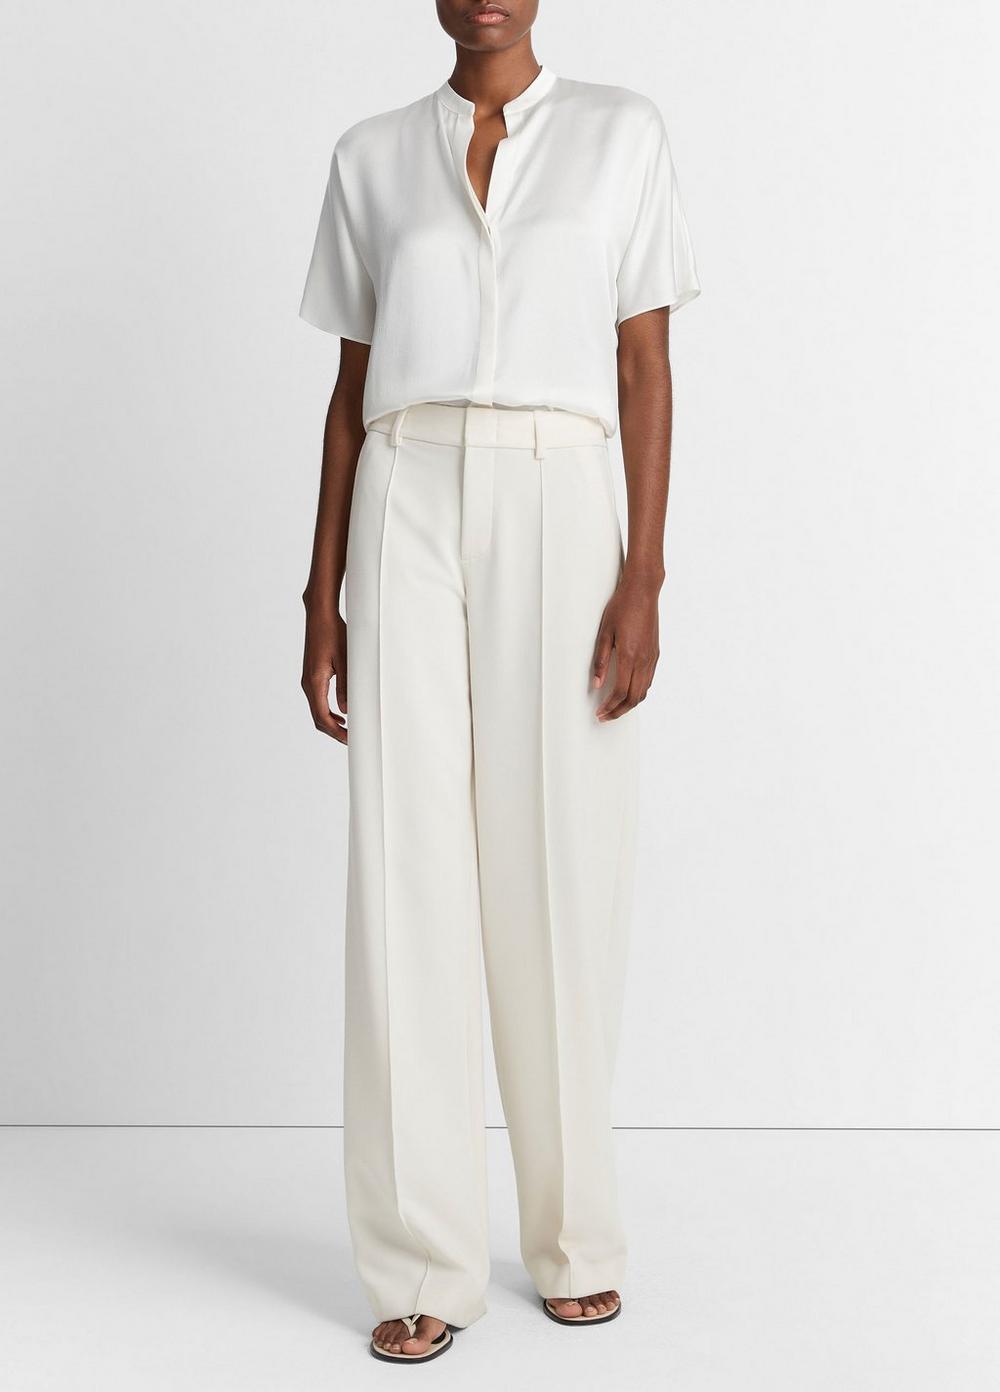 Silk Dolman Short-Sleeve Blouse, Off White, Size M Vince